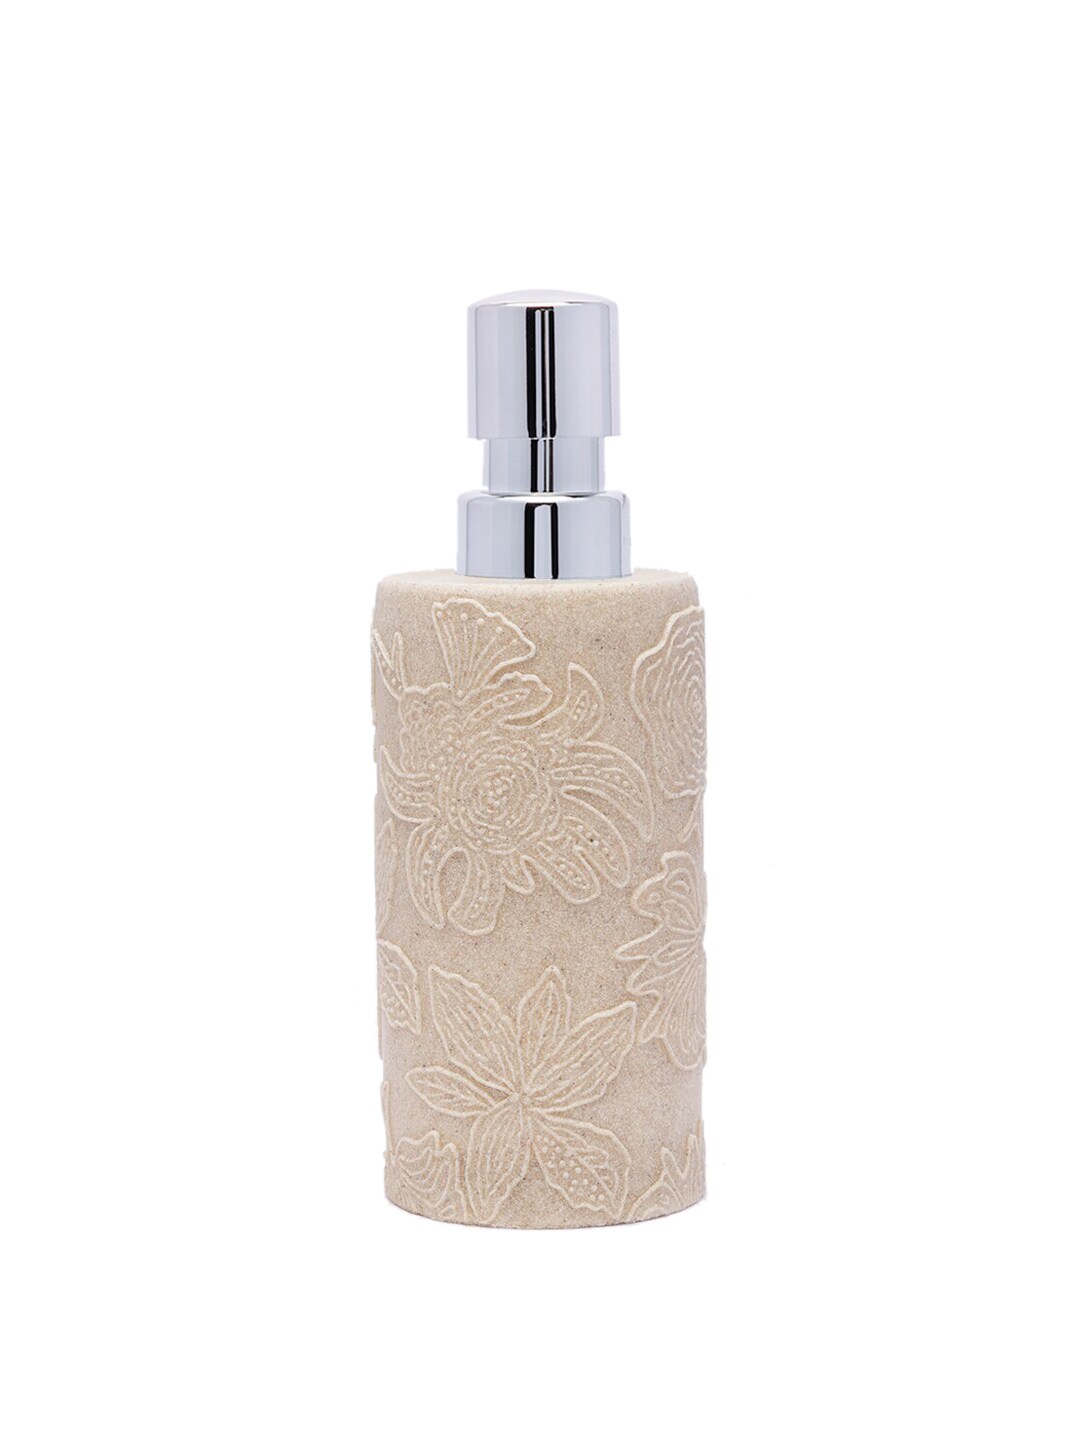 MARKET99  White Resin Leaf Design Soap Dispenser 420 Ml Price in India